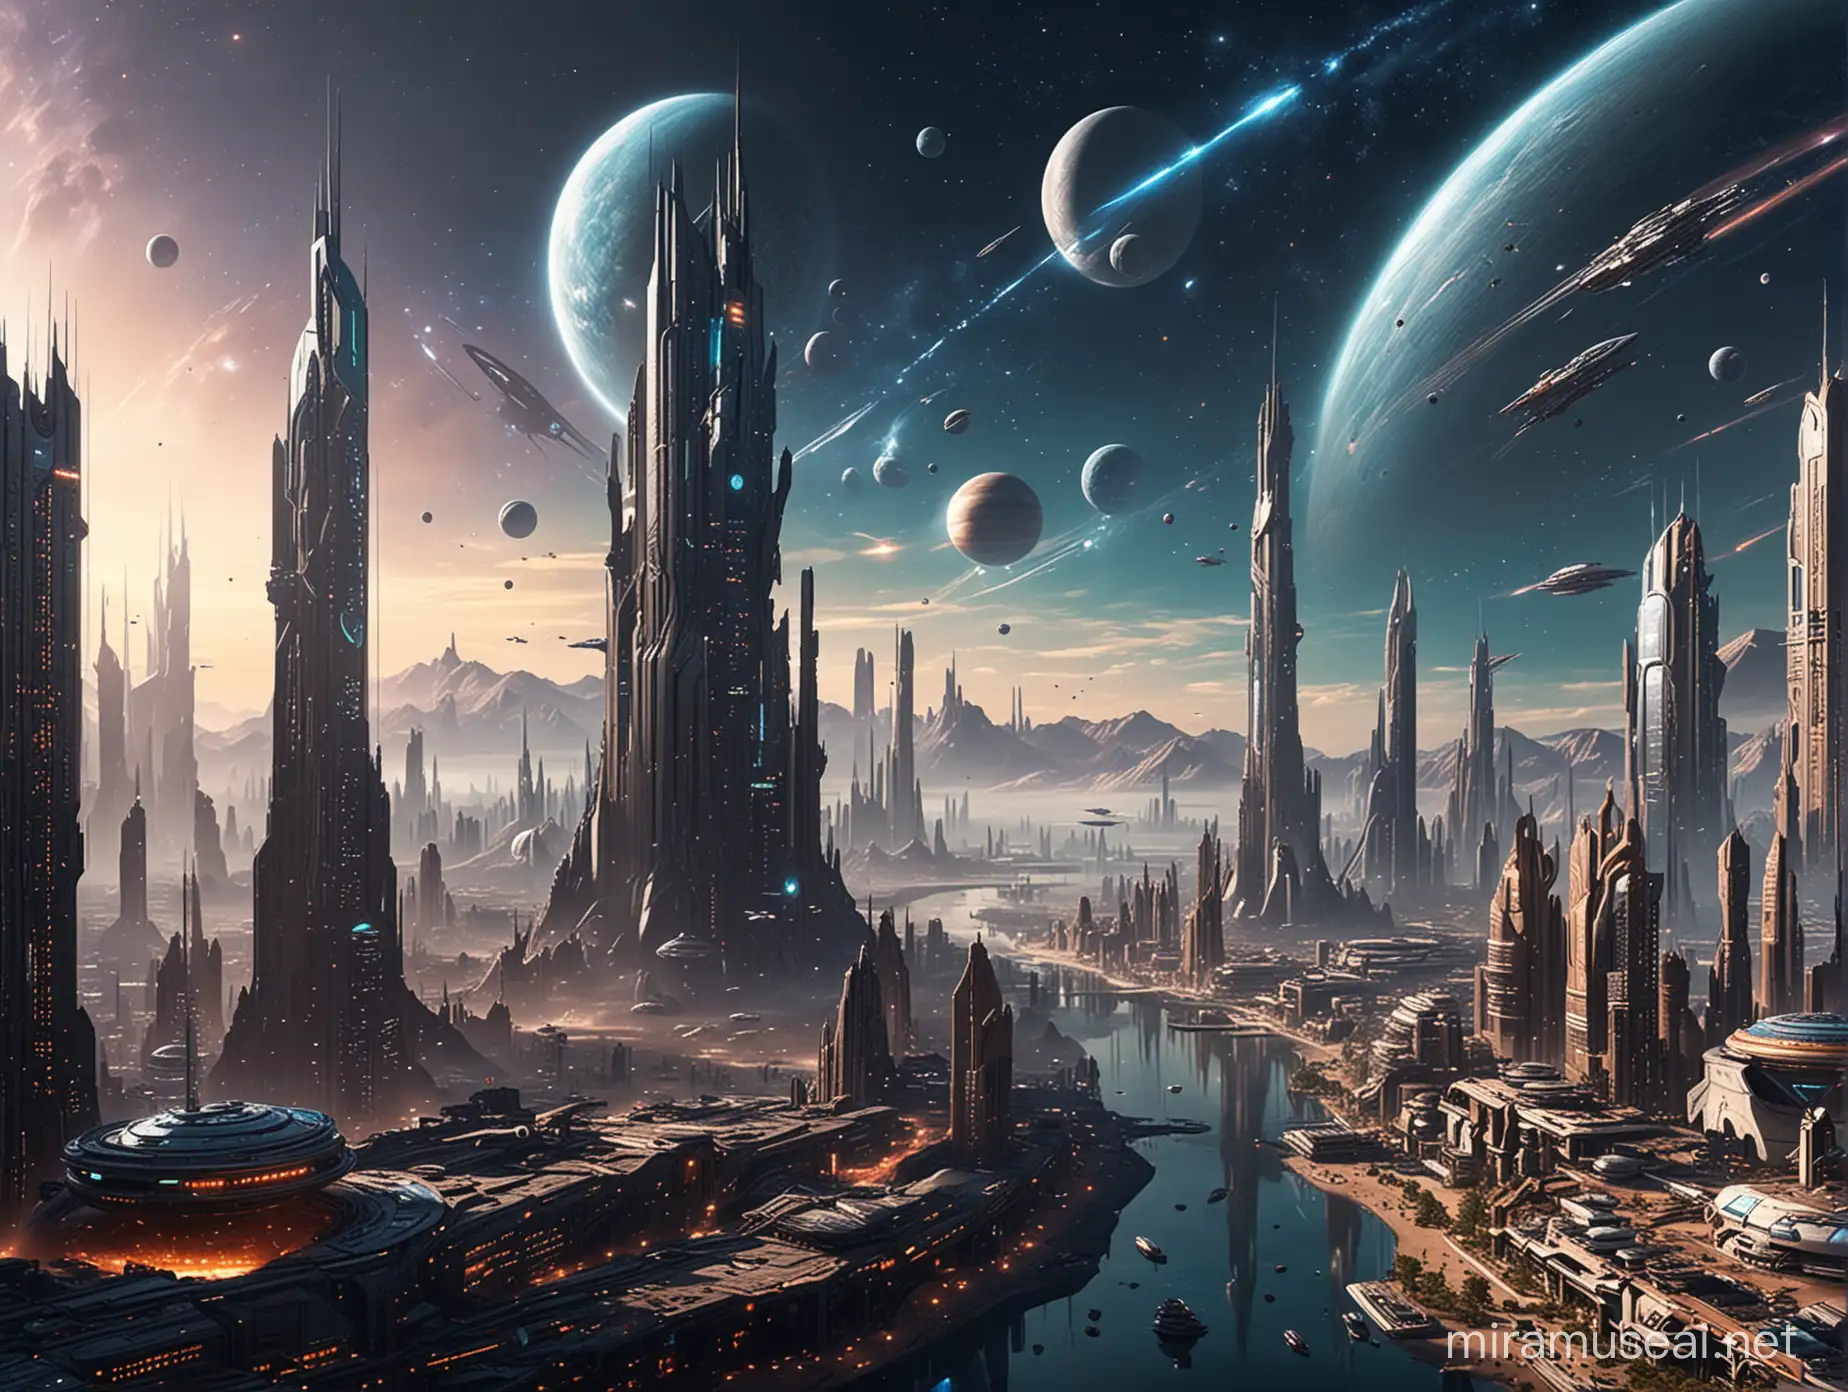 Sci fi futuristic extraterrestrial galaxy empire capital city